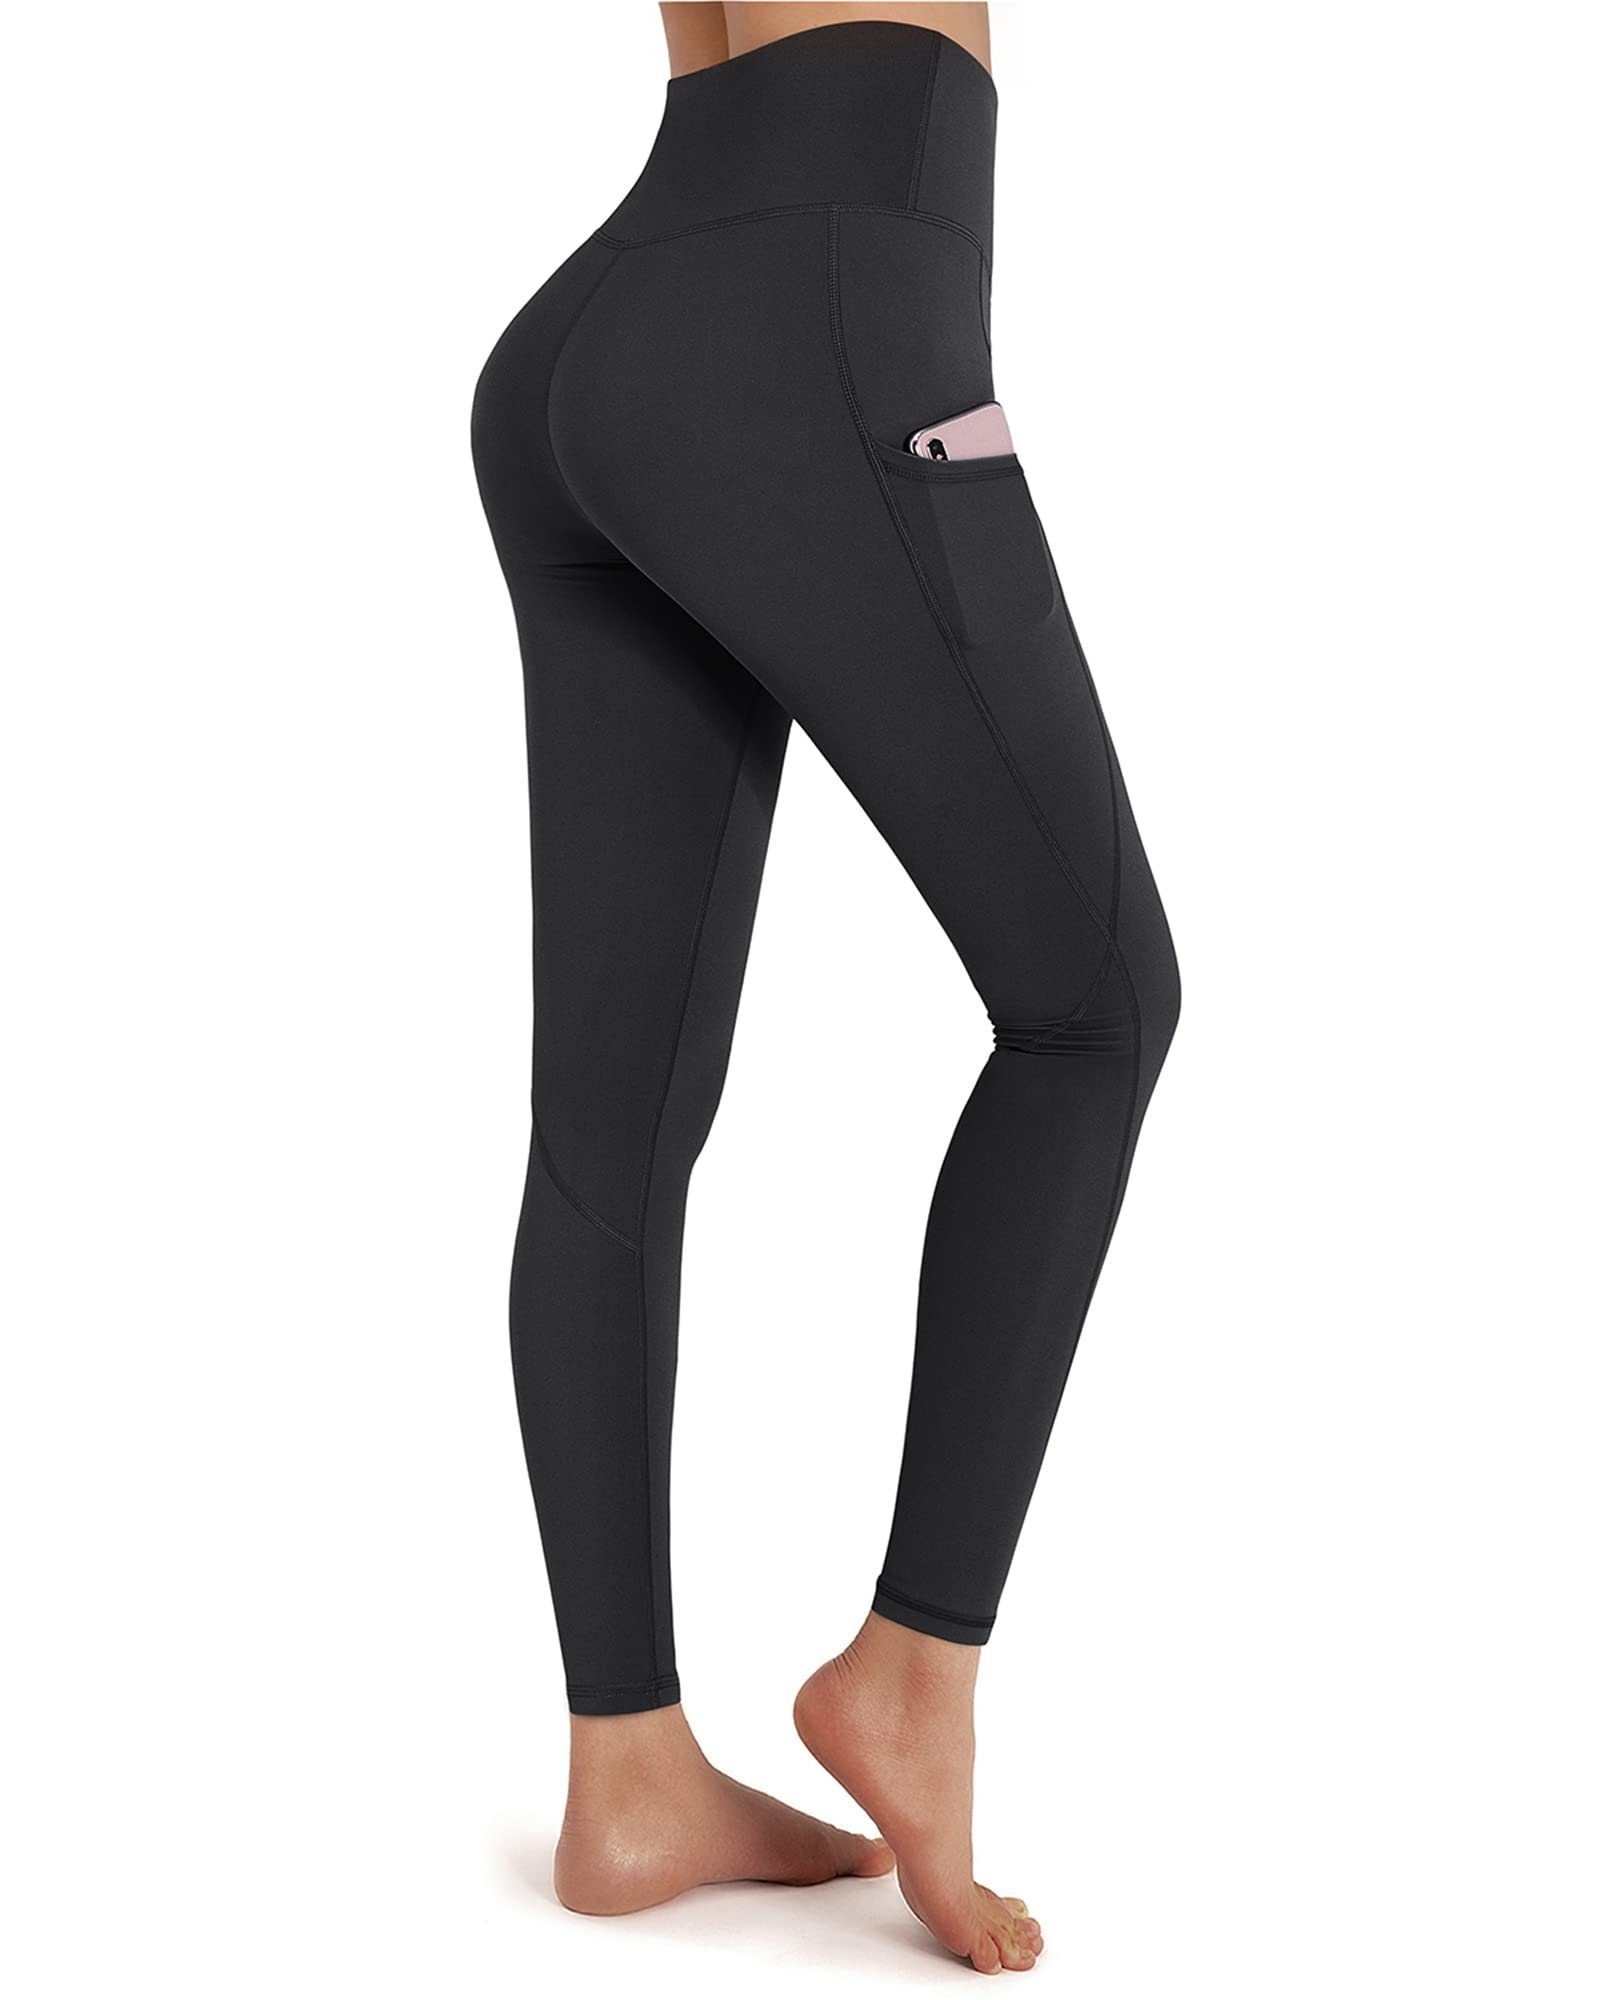 Taschen, Unisex Yogahose G4Free Damen-Yogahose mit Fitness-Laufleggings